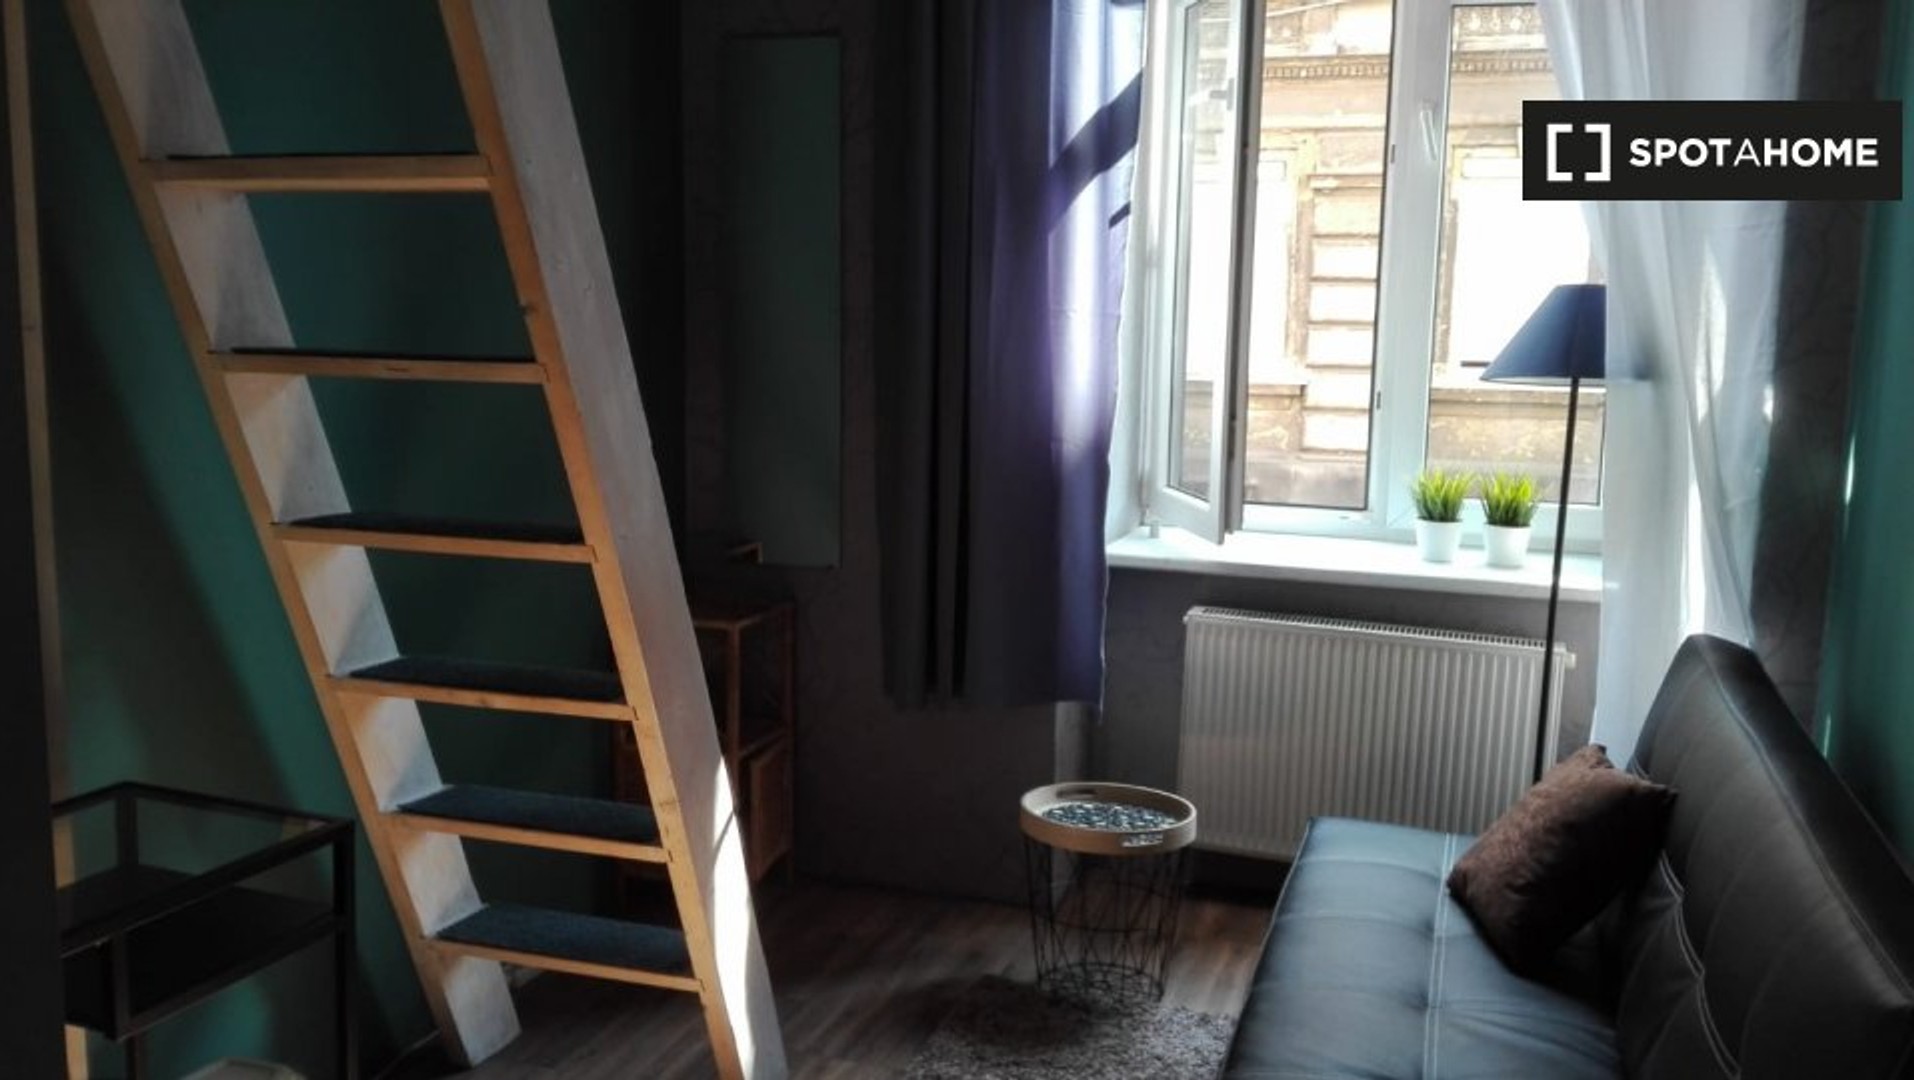 Very bright studio for rent in Krakow